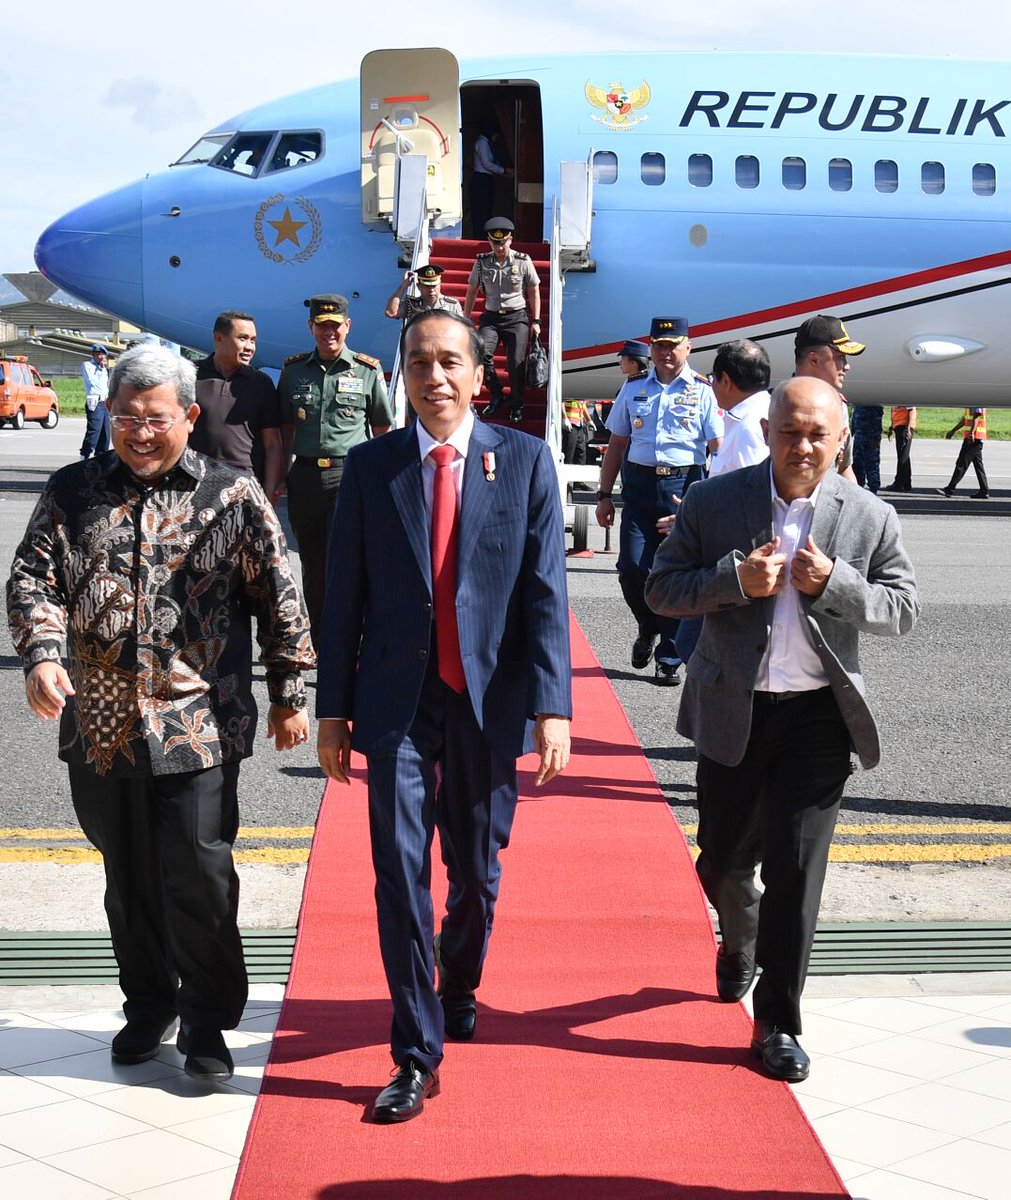 Presiden Joko Widodo mengerjai sejumlah pejabat negara